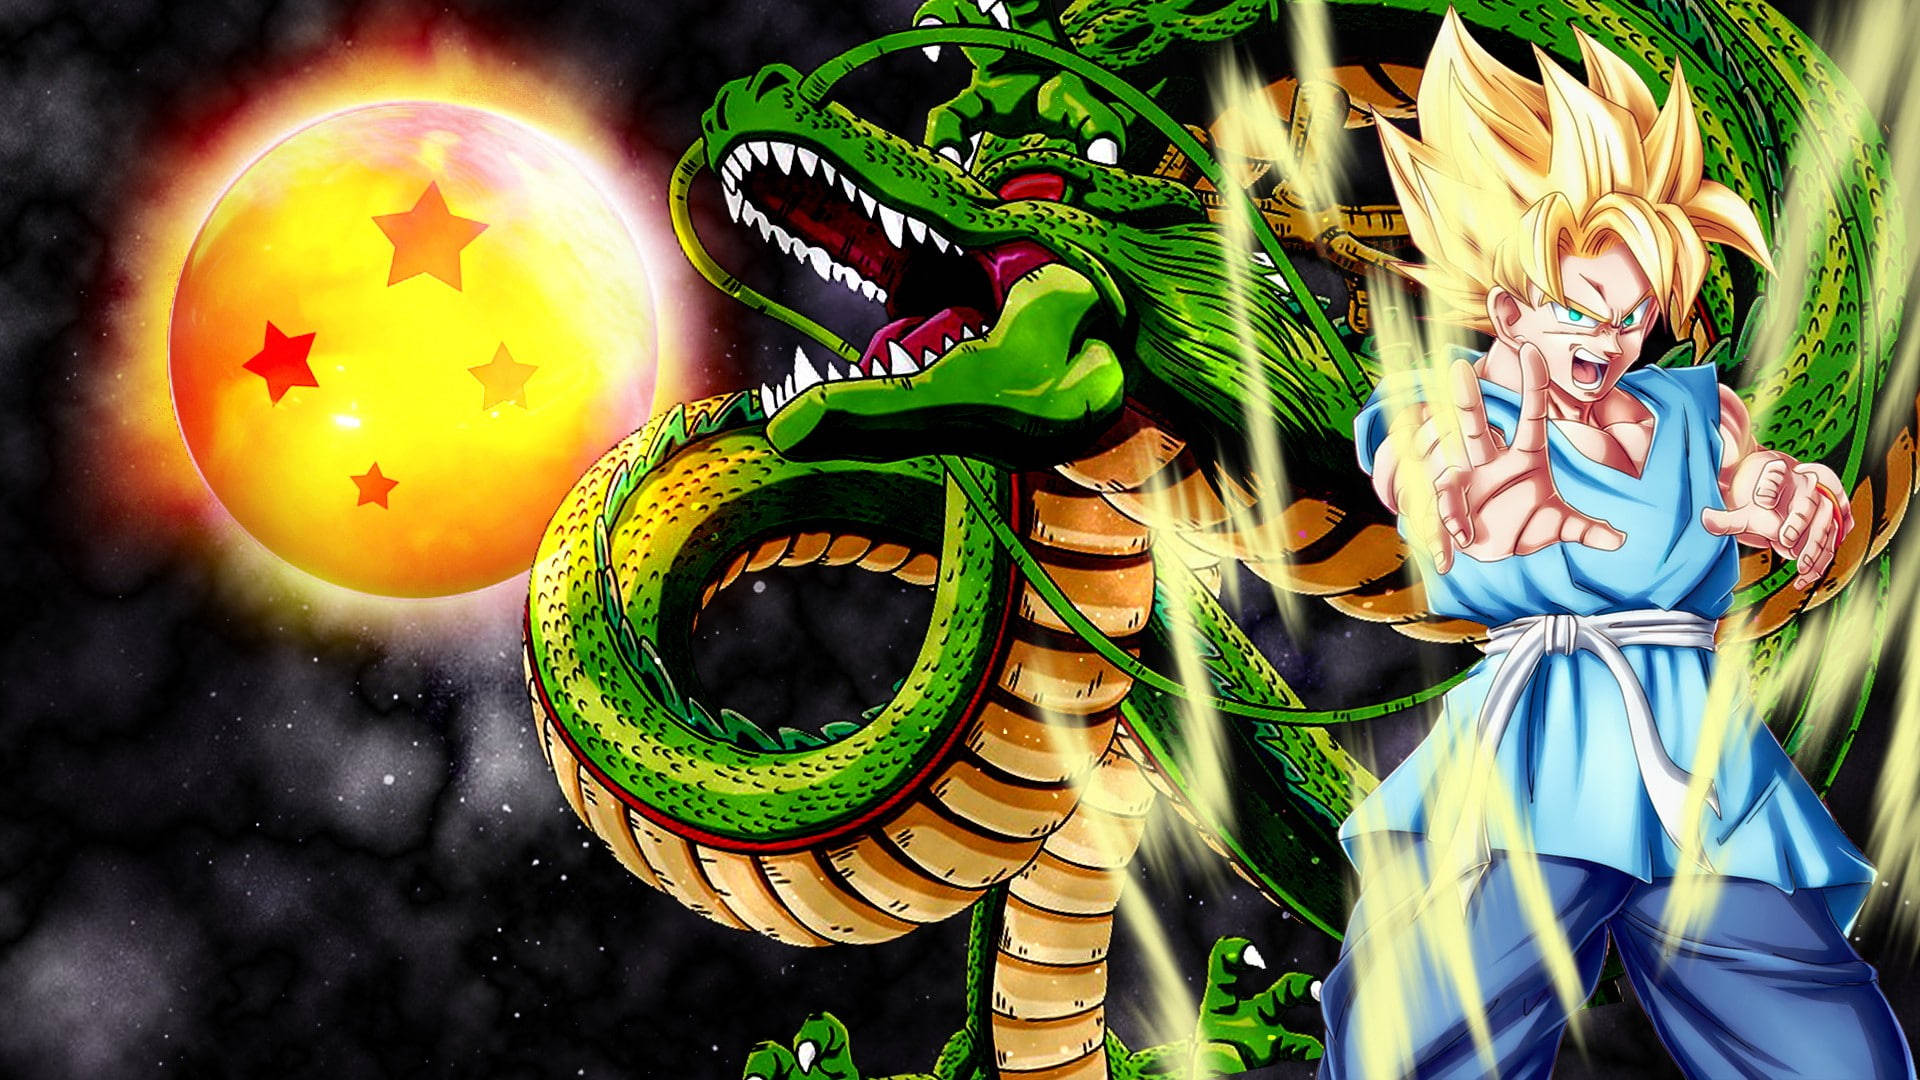 Goku And Green Dragon Background